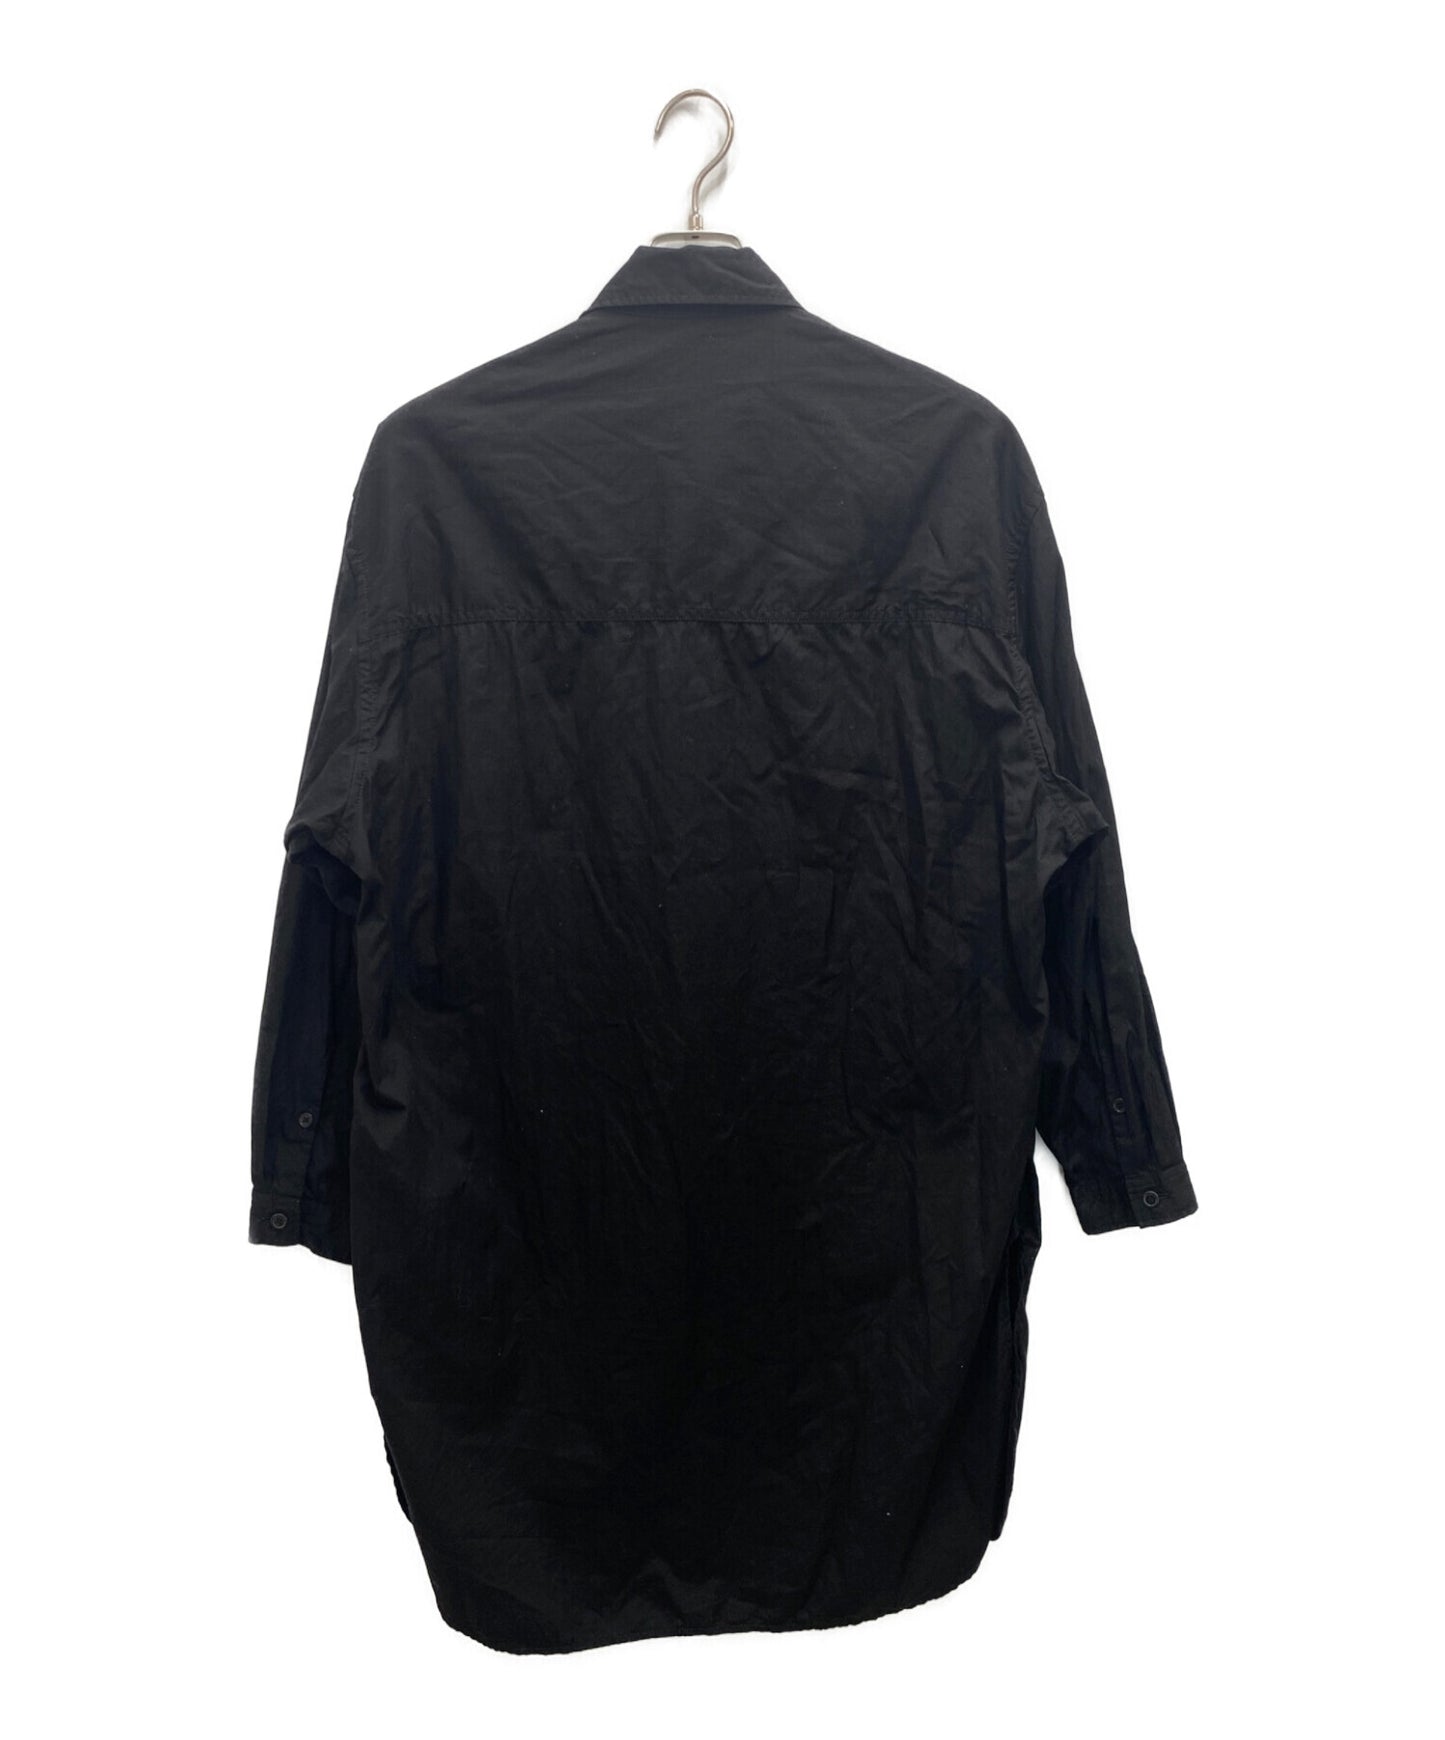 Yohji Yamamoto棉布寬布縫環長襯衫HN-B02-001